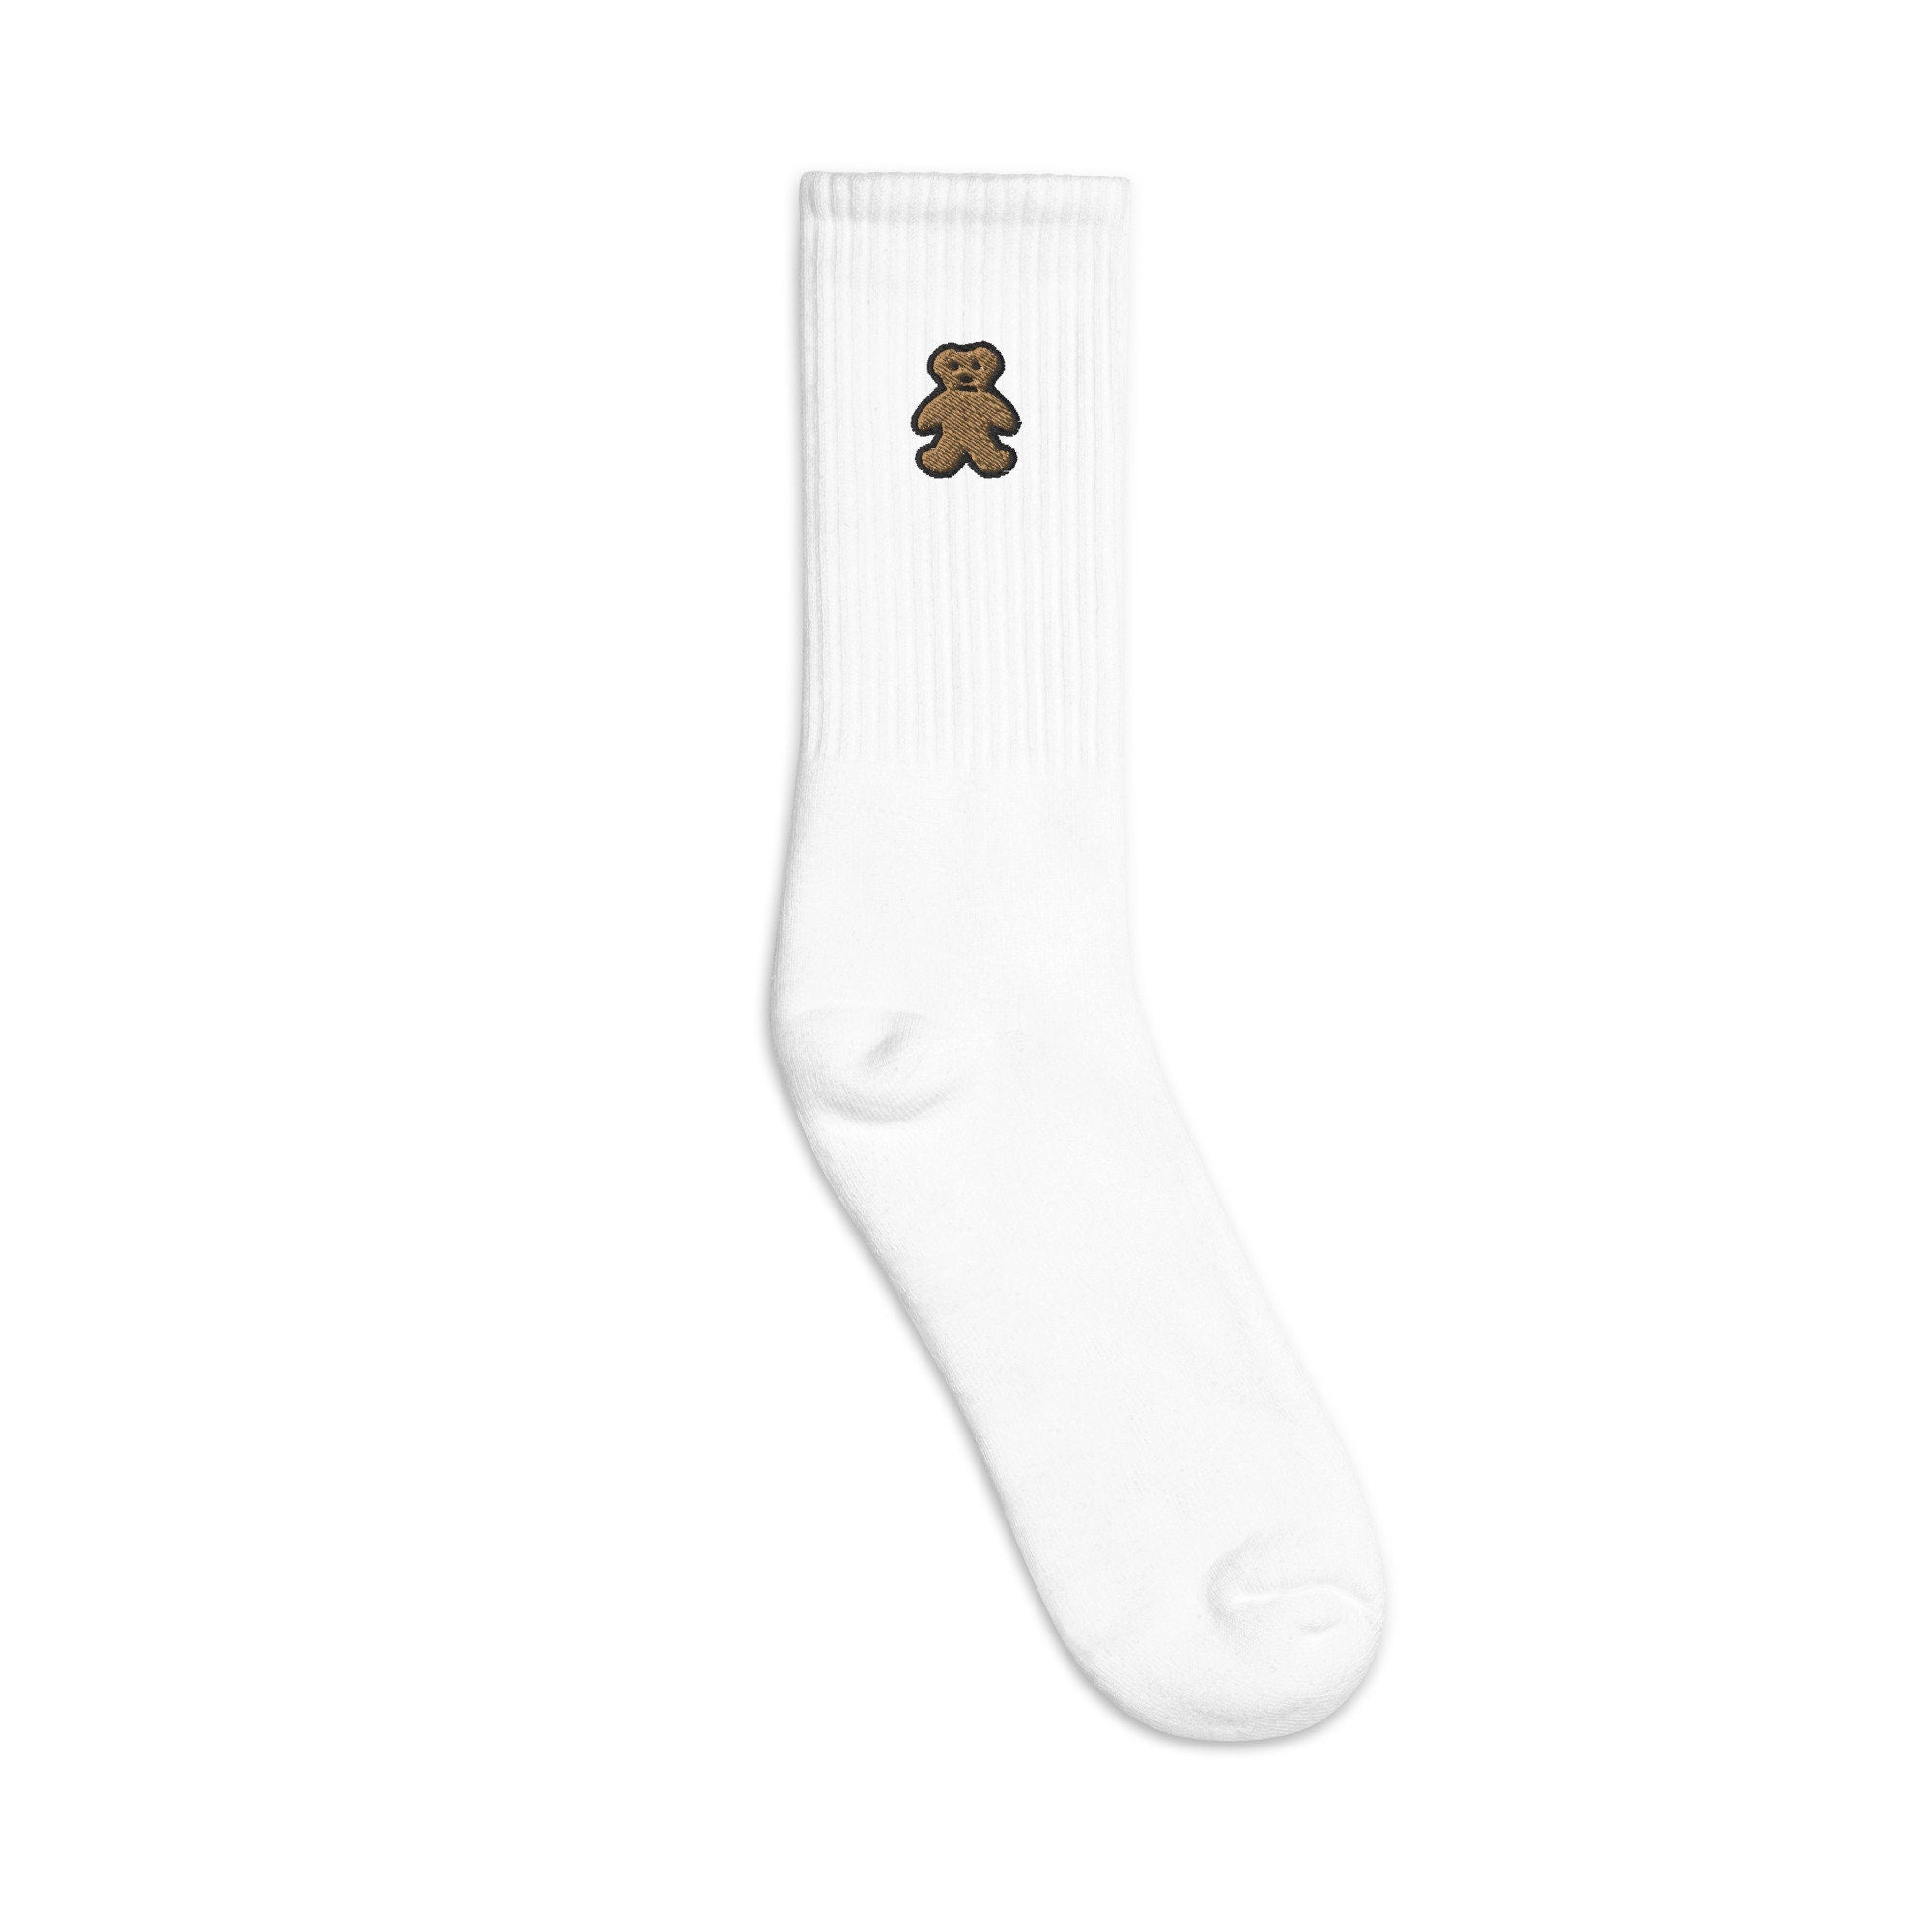 Teddy Bear Embroidered Socks, Premium Embroidered Socks, Long Socks Gift - Multiple Colors